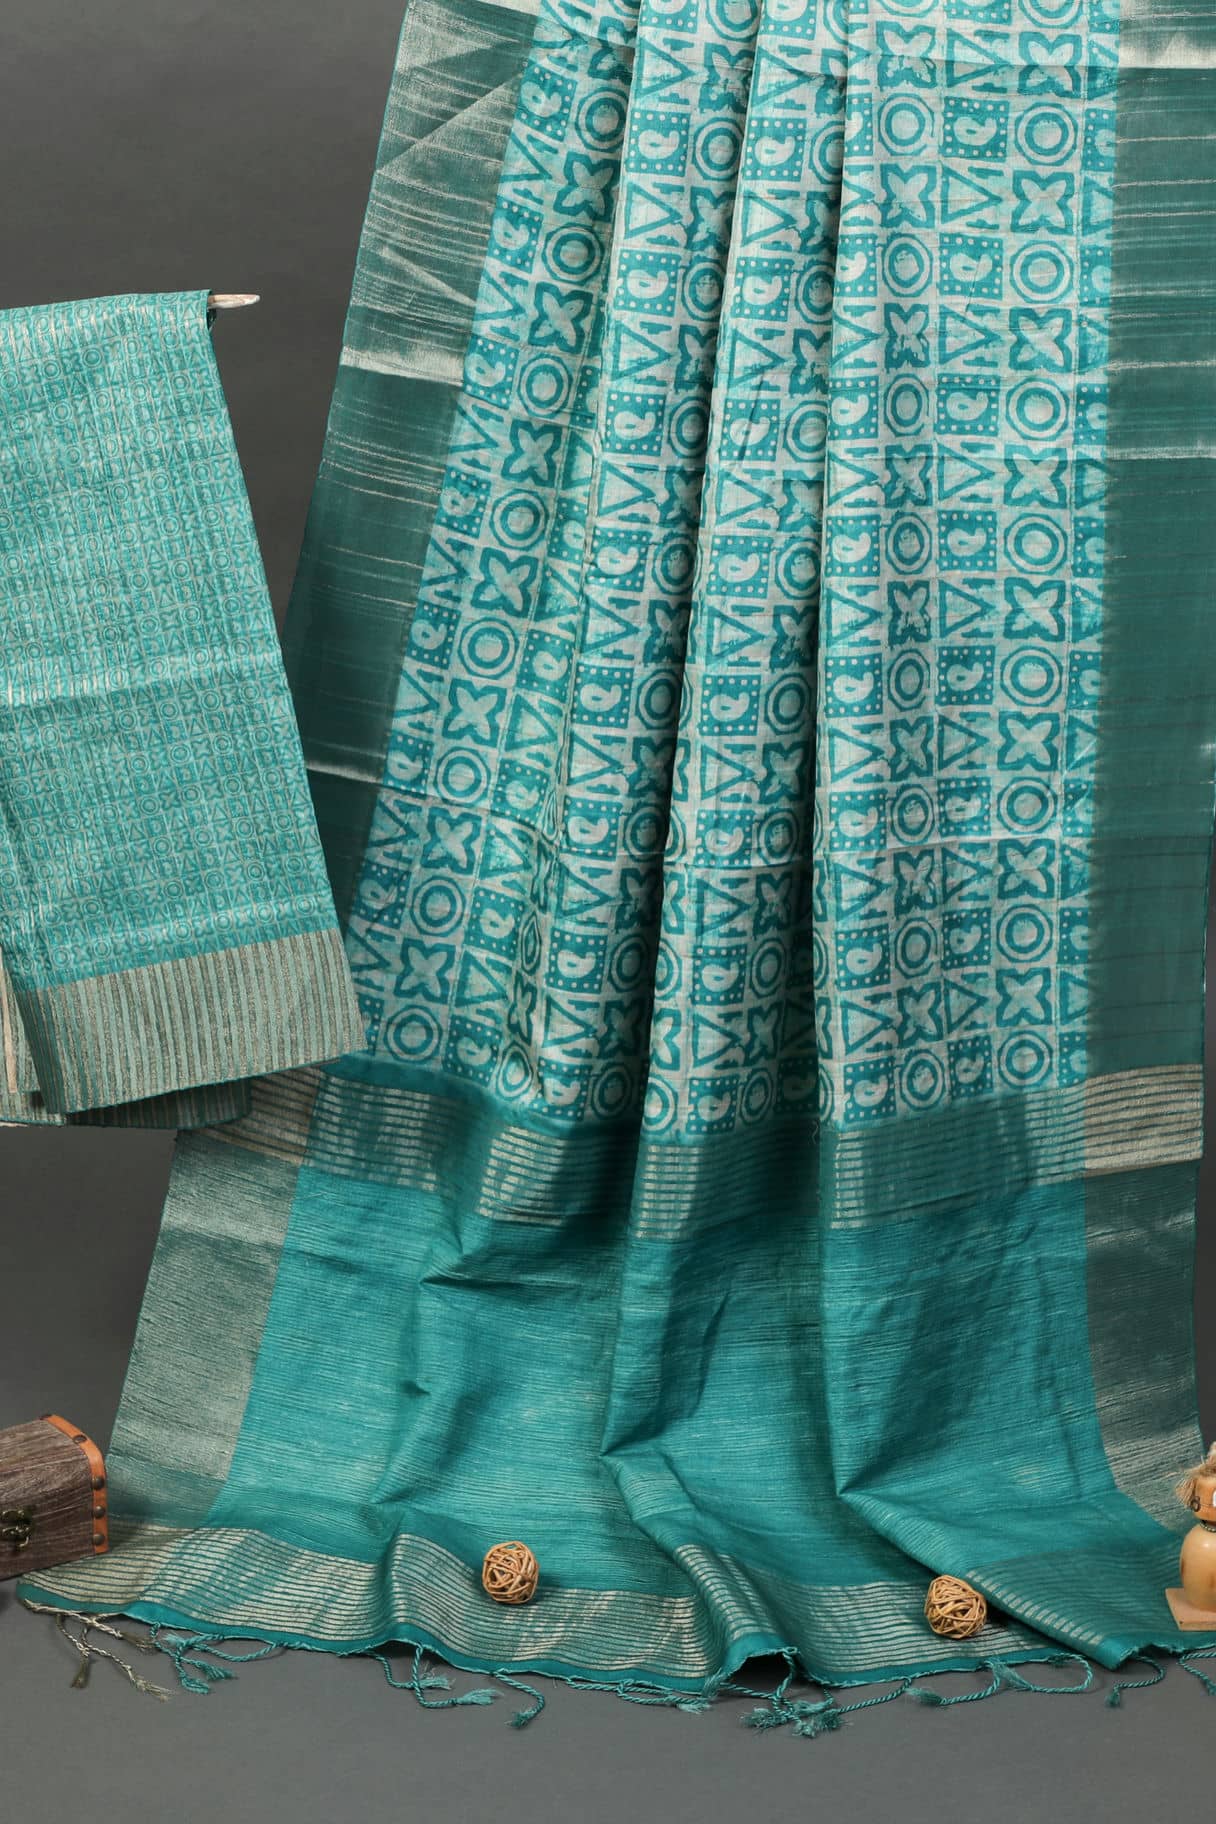 Stunning Sea Green Colored Cotton Linen Designer Printed Saree